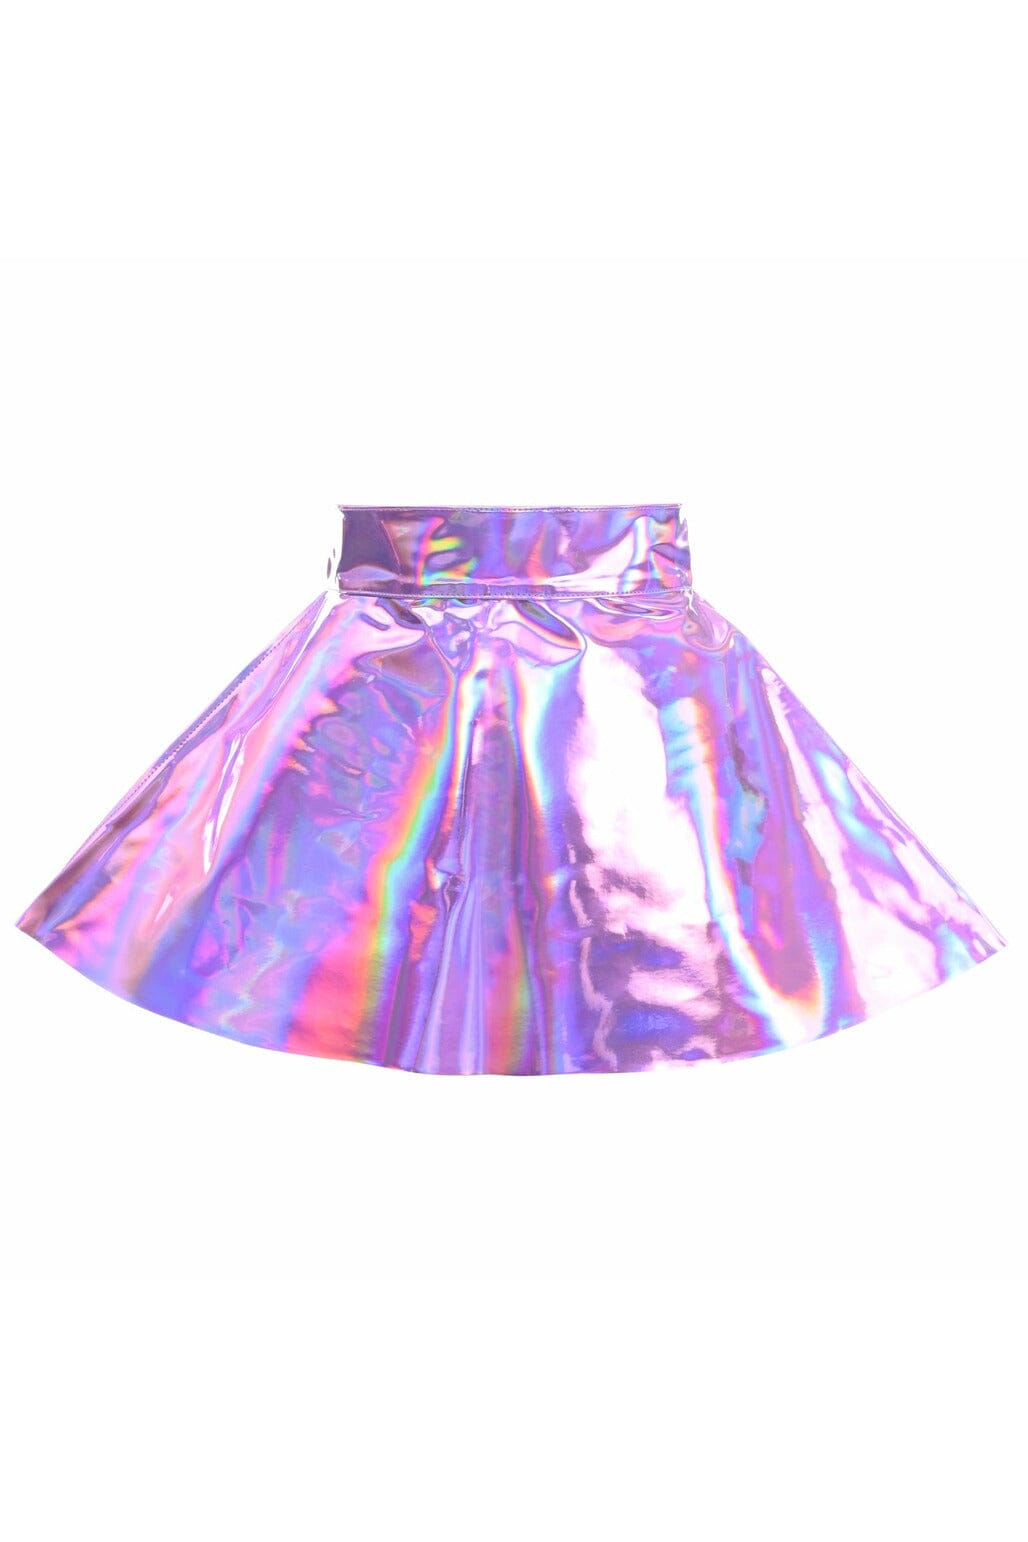 Lavender Holo Skater Skirt-Mini Skirts-Daisy Corsets-Hologram-S-SEXYSHOES.COM